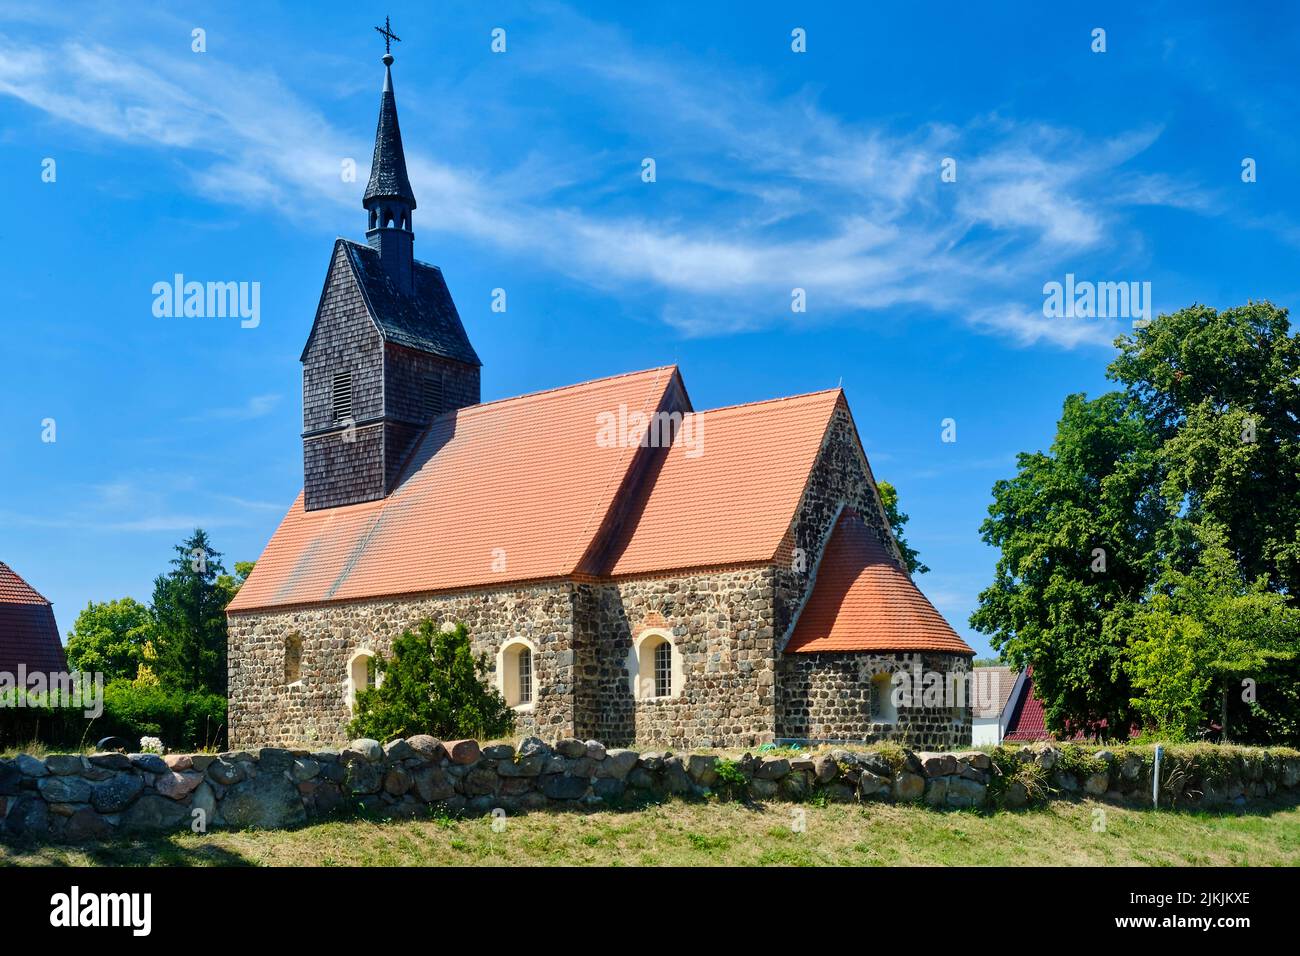 Hohenwerbig Village Church, Niemegk, Brandenburg, Germany, Europe Stock Photo